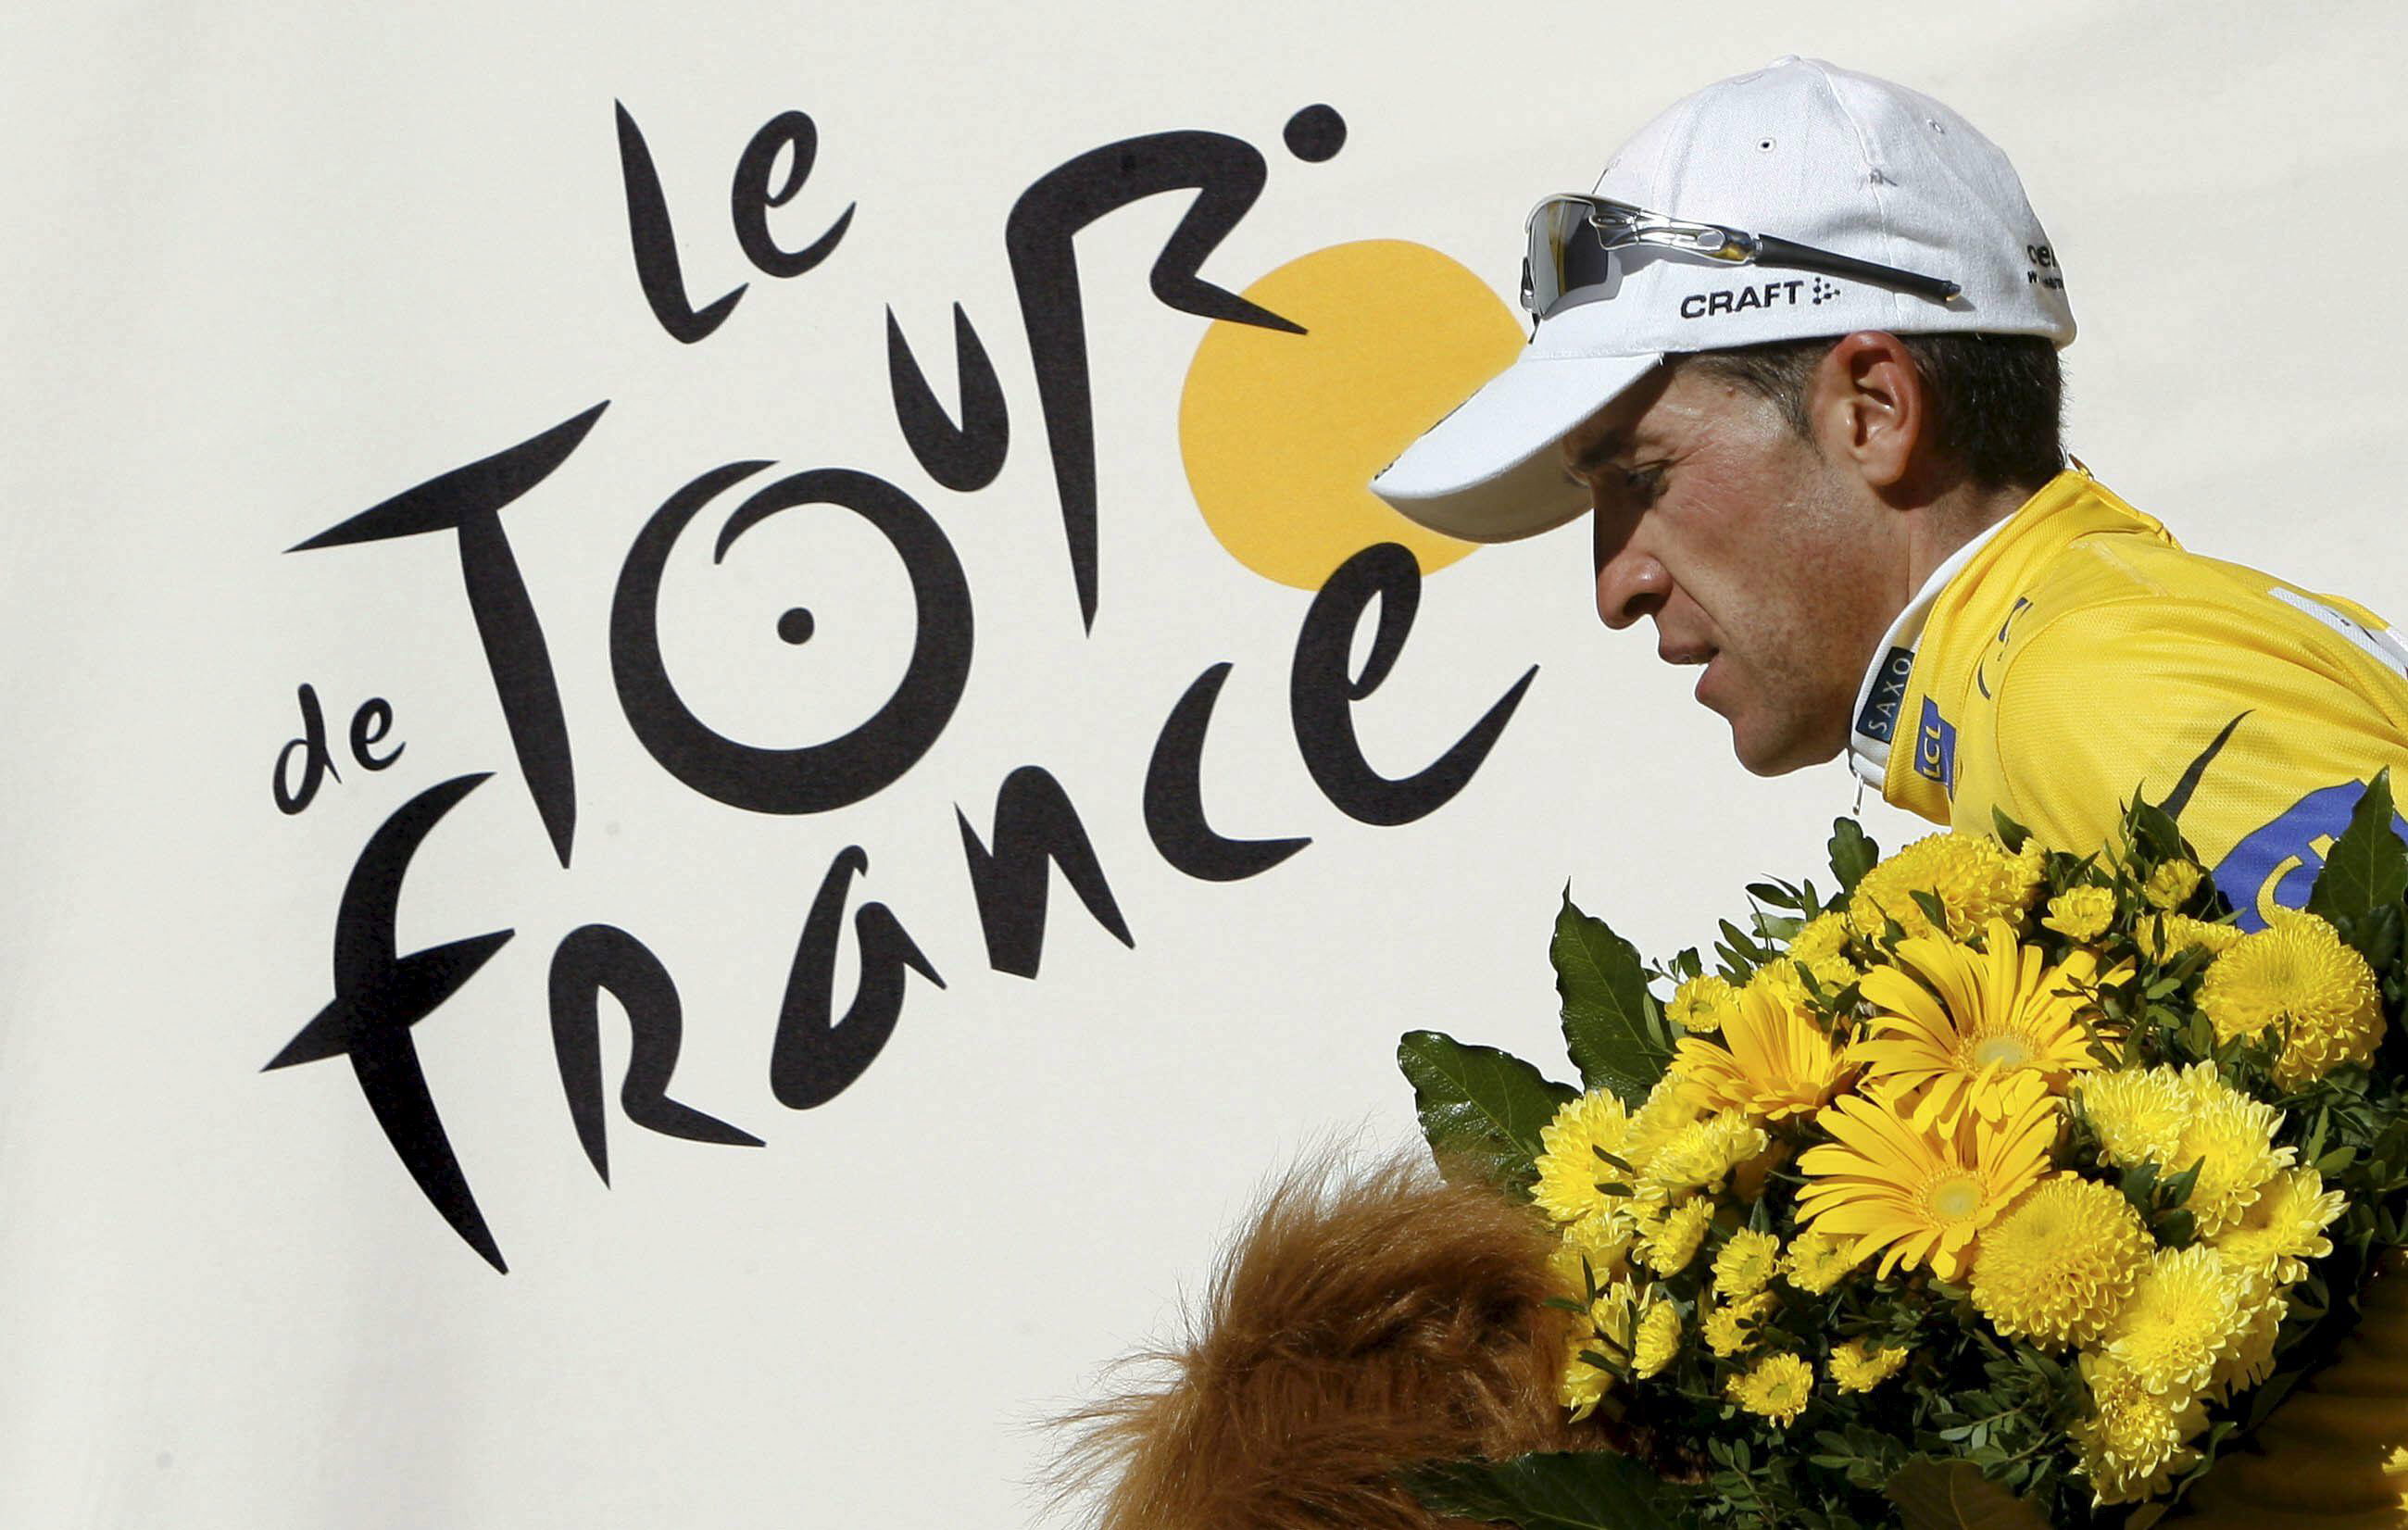 FRA03. L'ALPE D'HUEZ (FRANCIA), 23/07/08.- El nuevo maillot amarillo el corredor español del equipo CSC - Saxo Bank, Carlos Sastre, en el podio de l'Alpe d'Huez donde se ha impuesto en la llegada de la decimoséptima etapa del Tour de Francia 2008. EFE/Manuel Bruque.